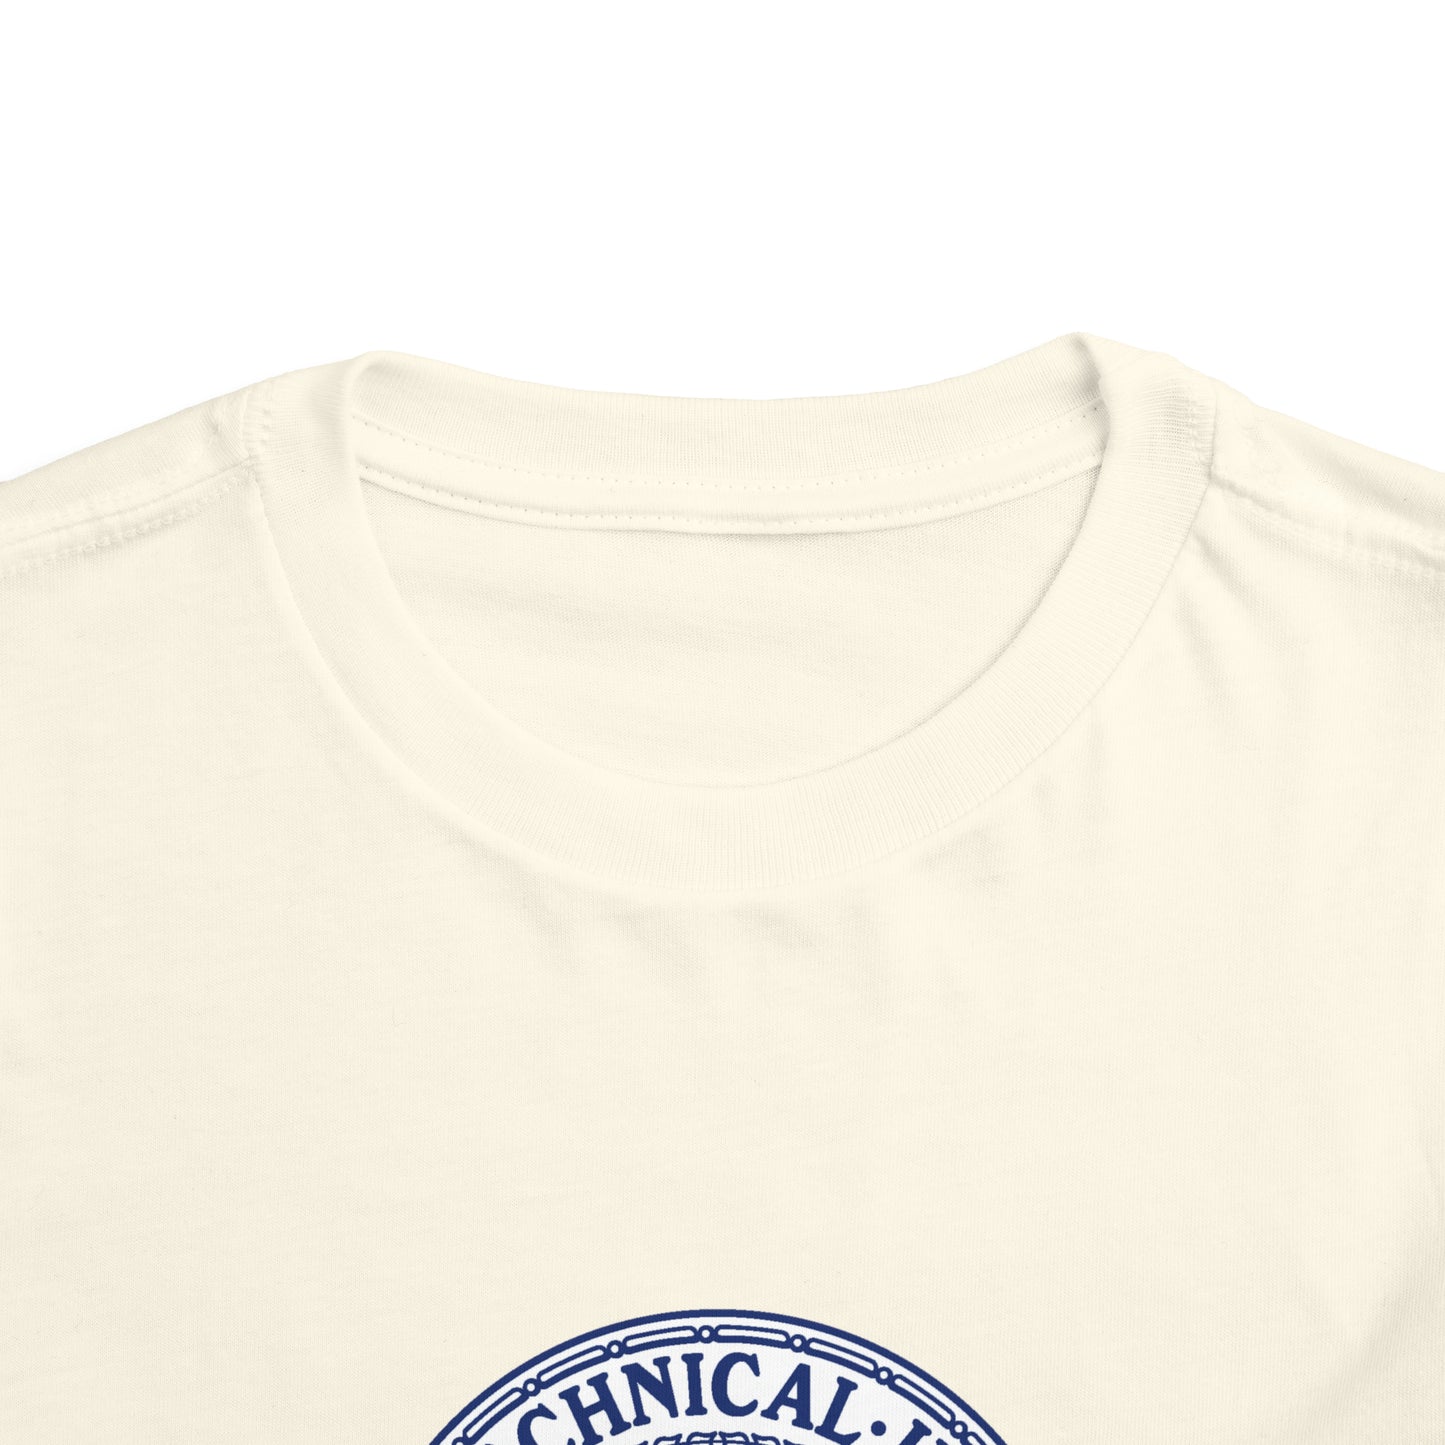 Family - Brooklyn Tech Seal - Toddler Short Sleeve T-Shirt